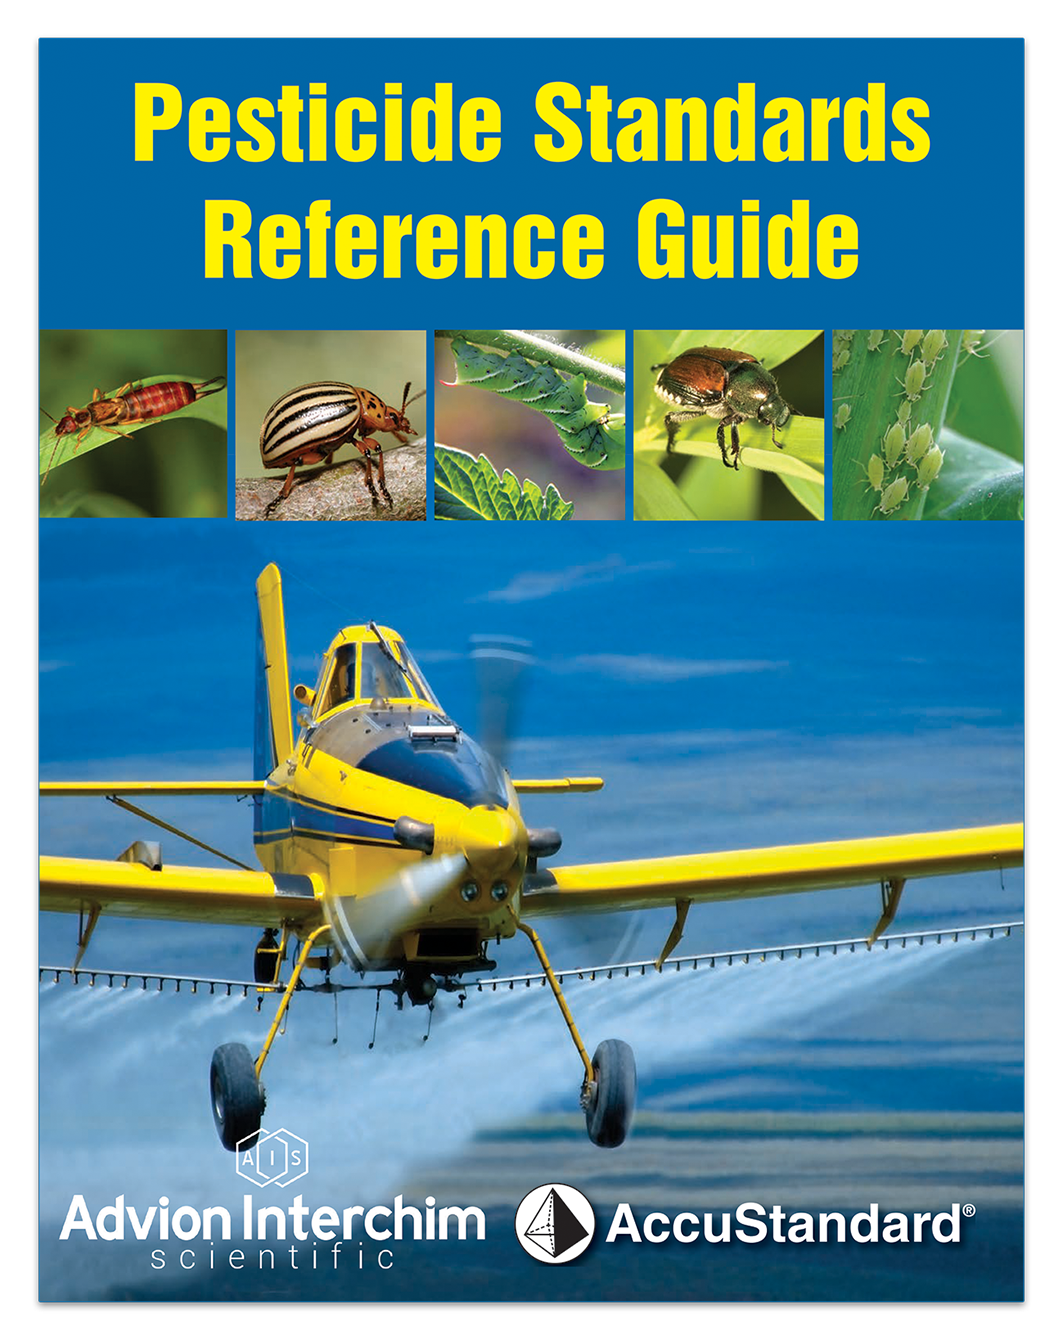 Pesticide_Standards_Reference_Guide_Accustandard_Advion_Interchim_Scientific_0322